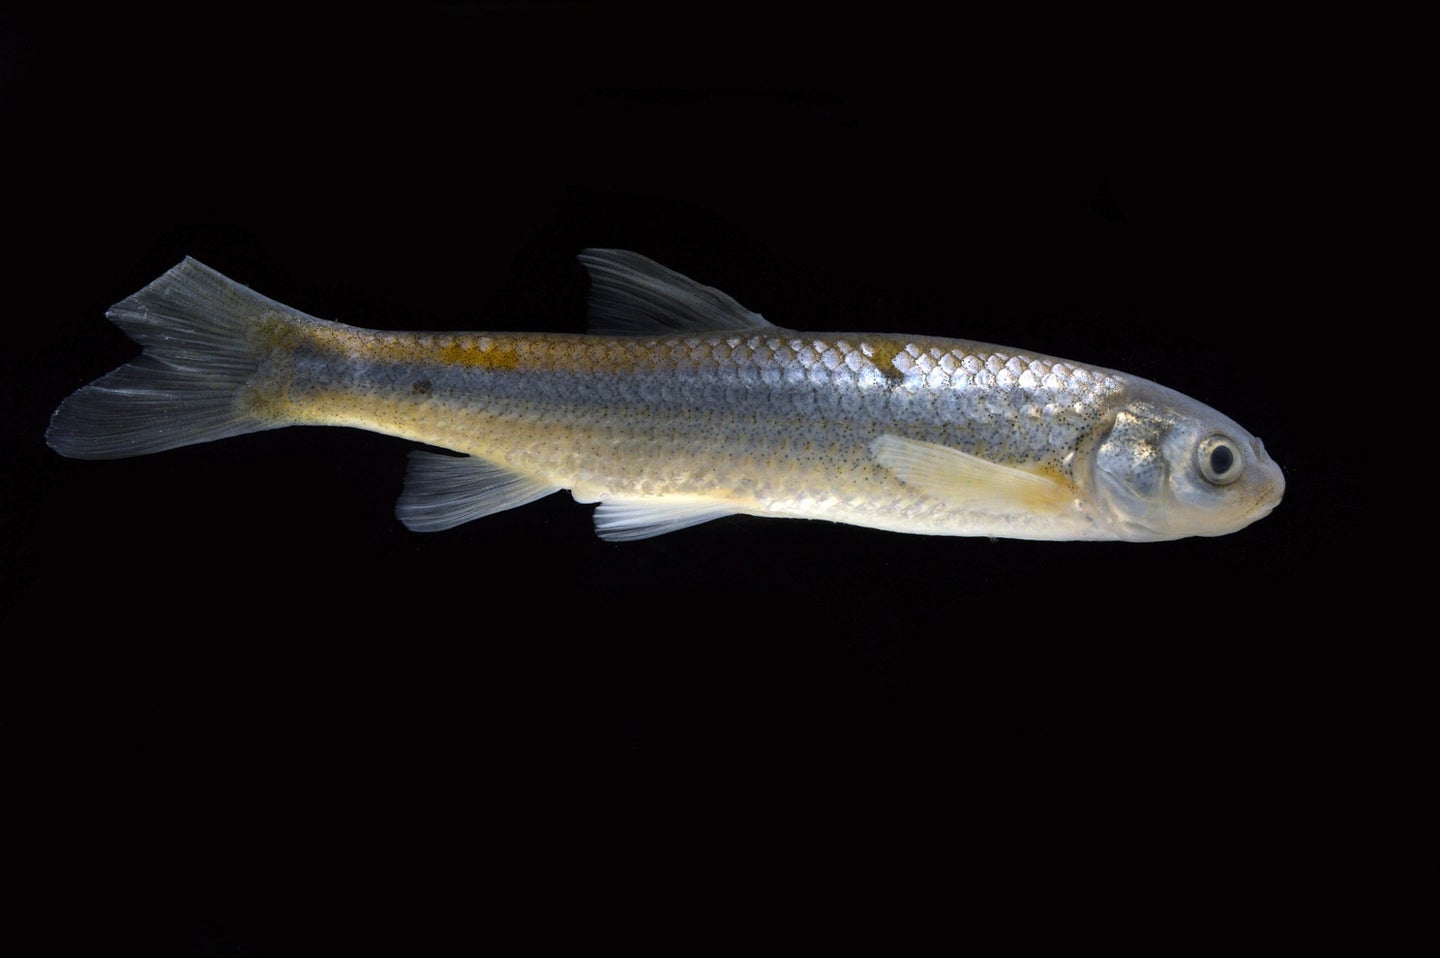 Rio Grande silvery minnow endangered fish on black background